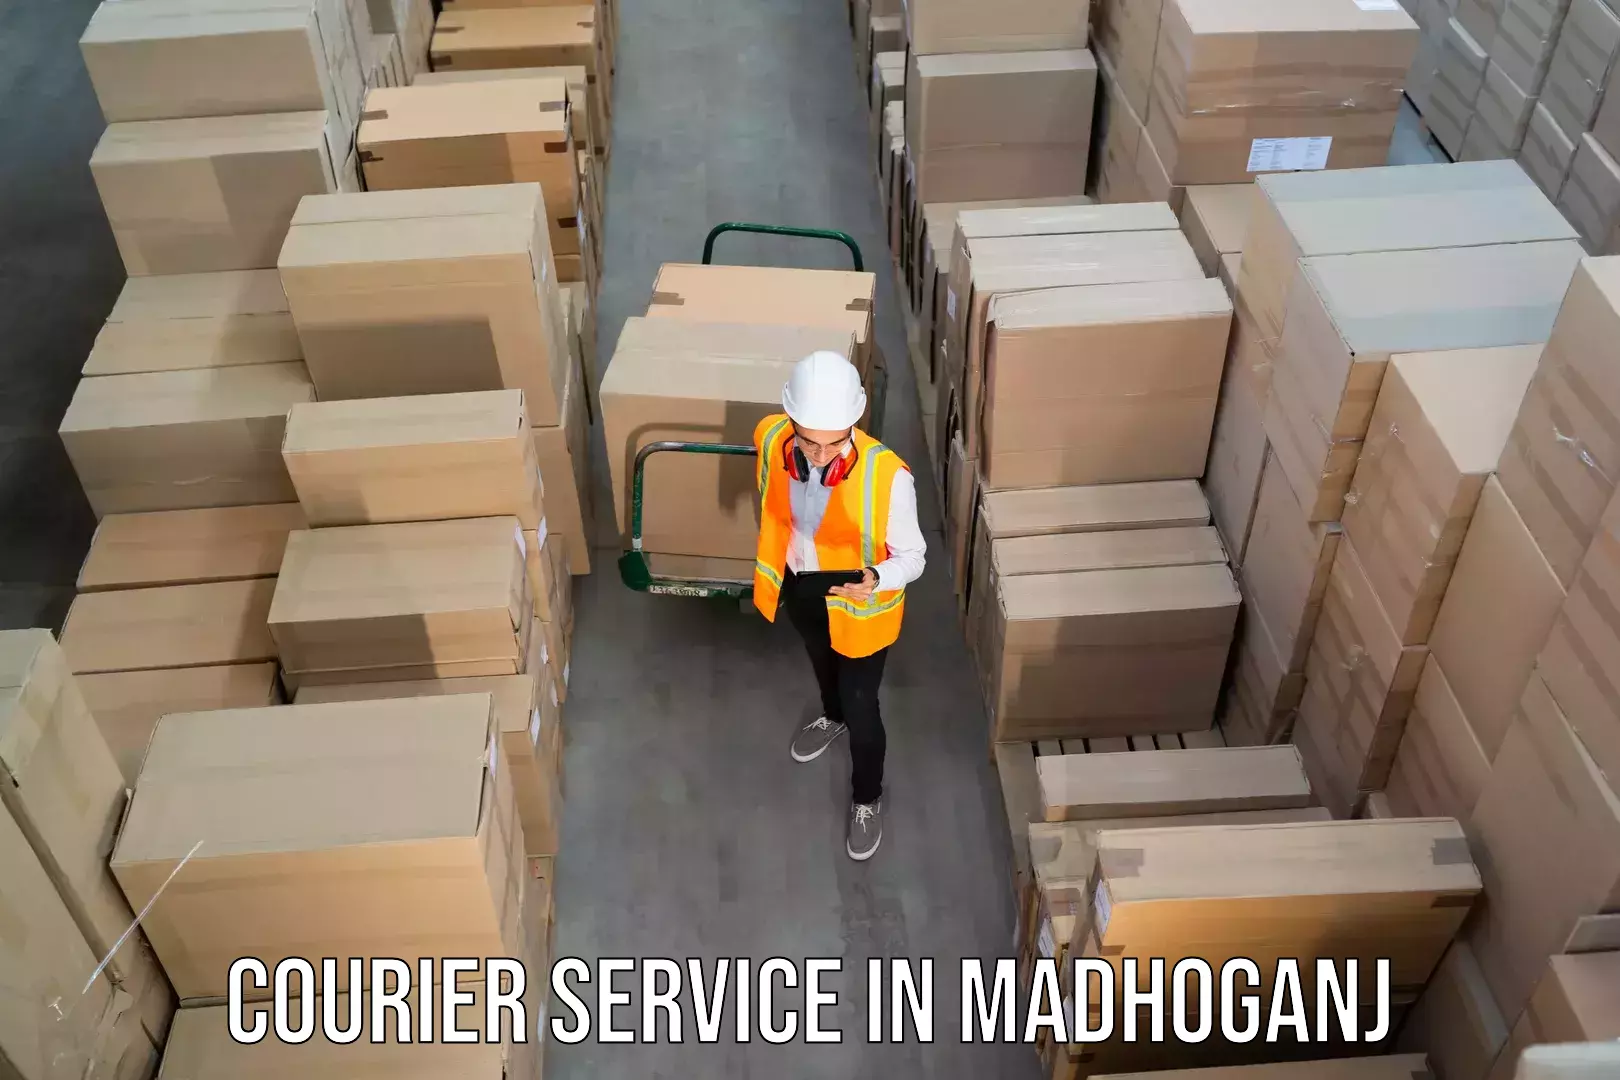 Comprehensive delivery network in Madhoganj